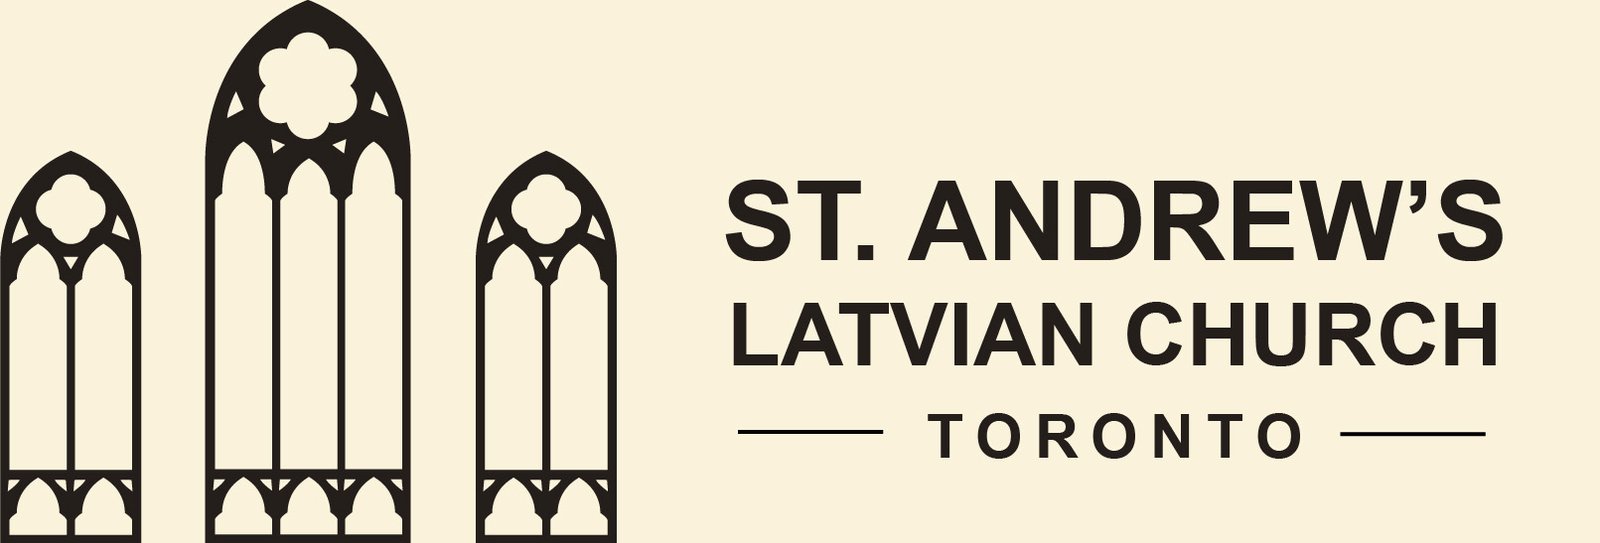 St. Andrew's Latvian Church